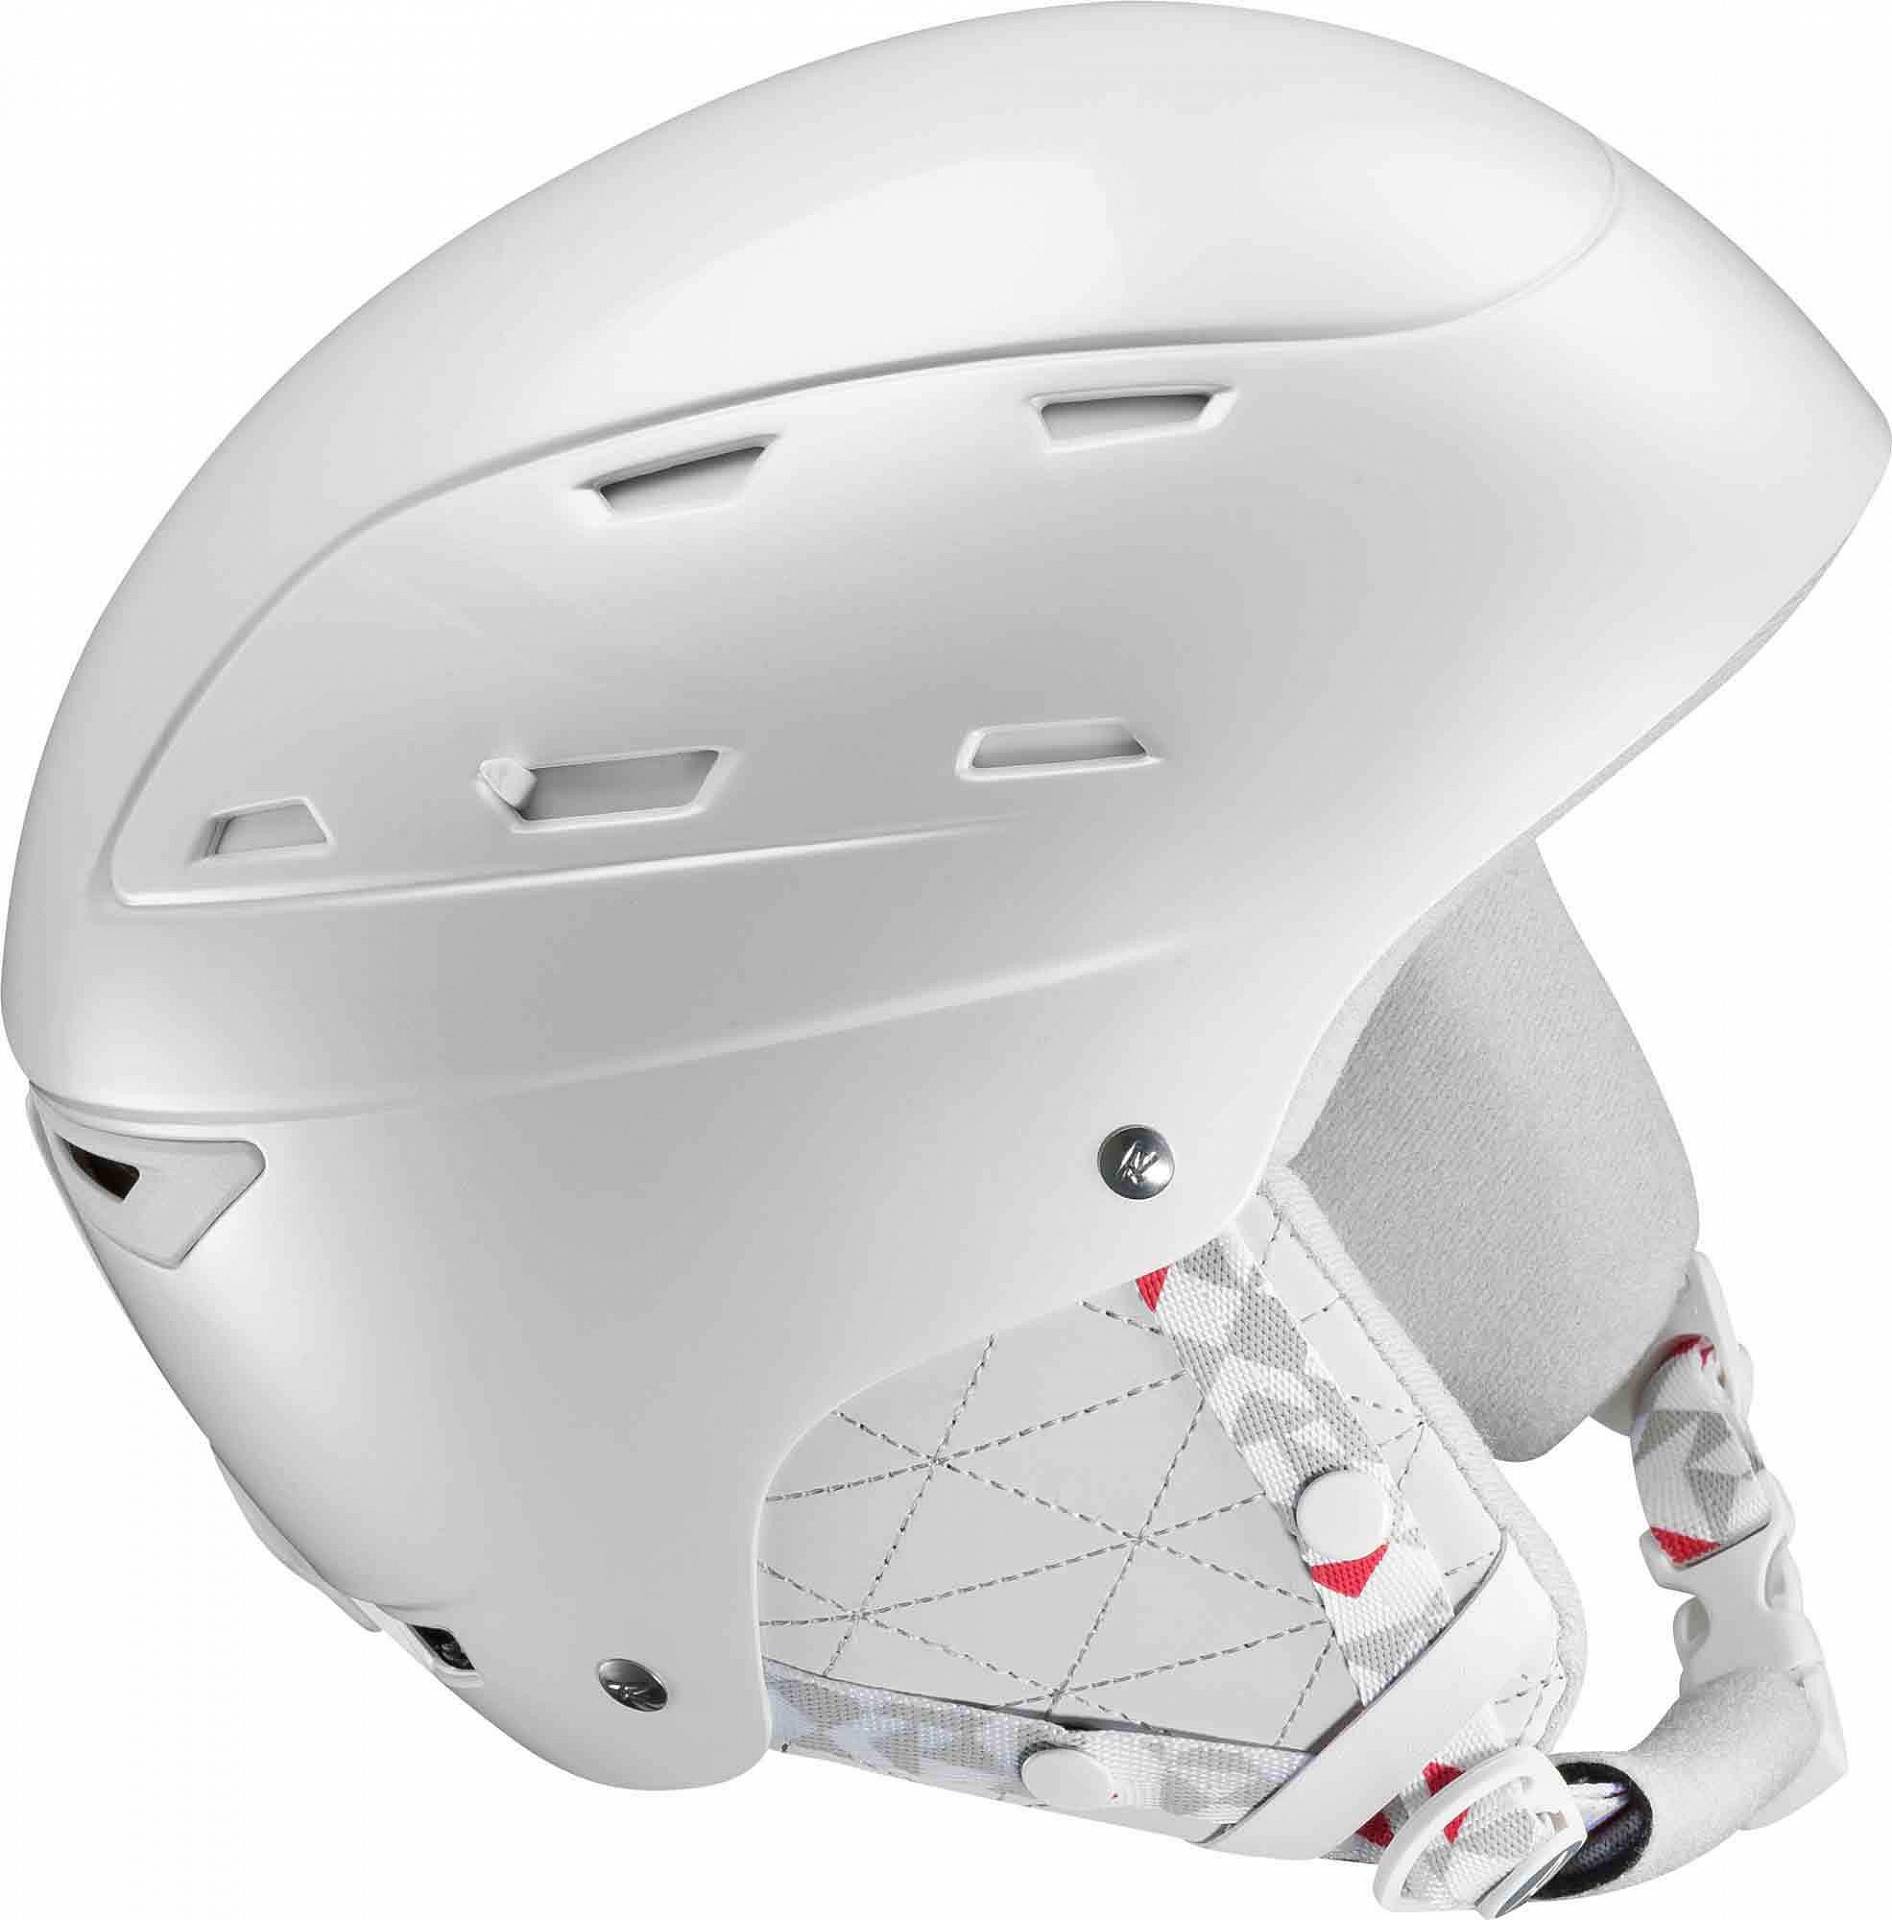 ROSSIGNOL helma REPLY W WHITE 2017